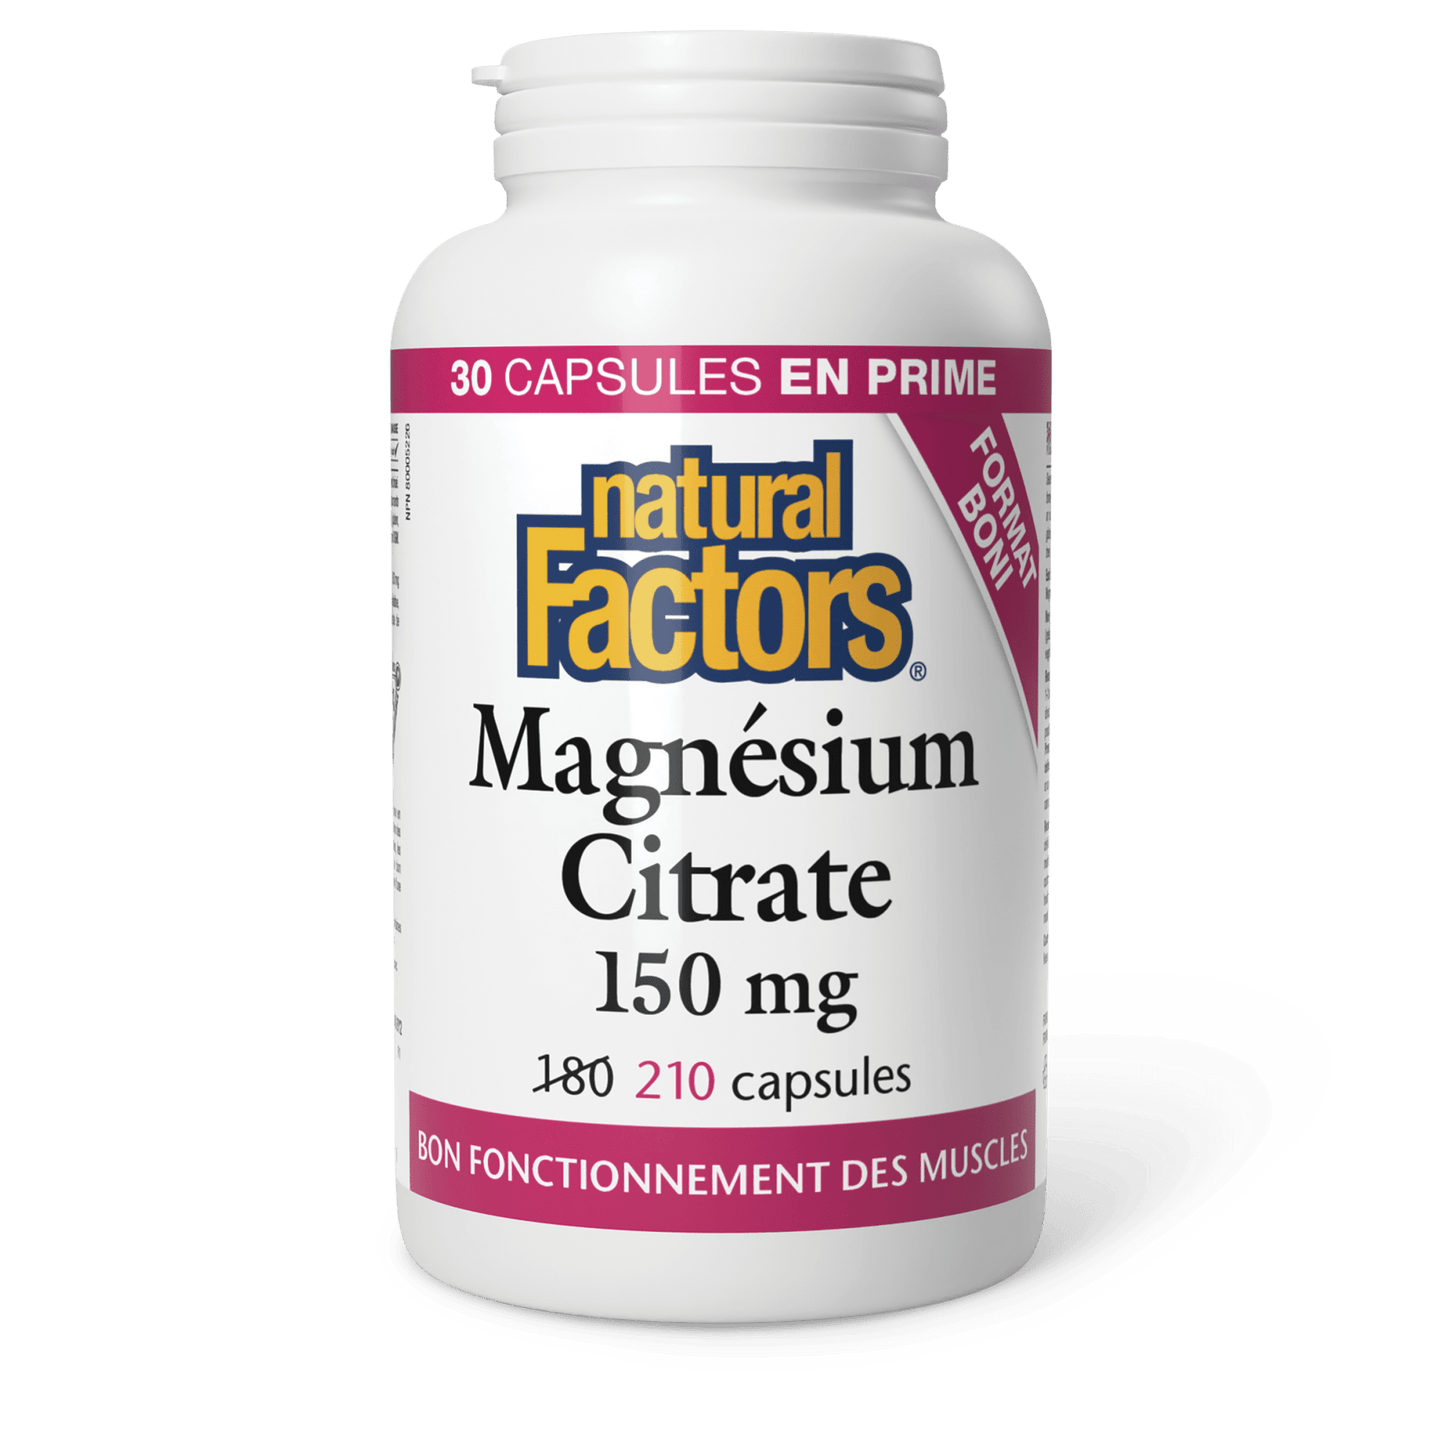 Magnésium Citrate 150 mg, Natural Factors|v|image|8161